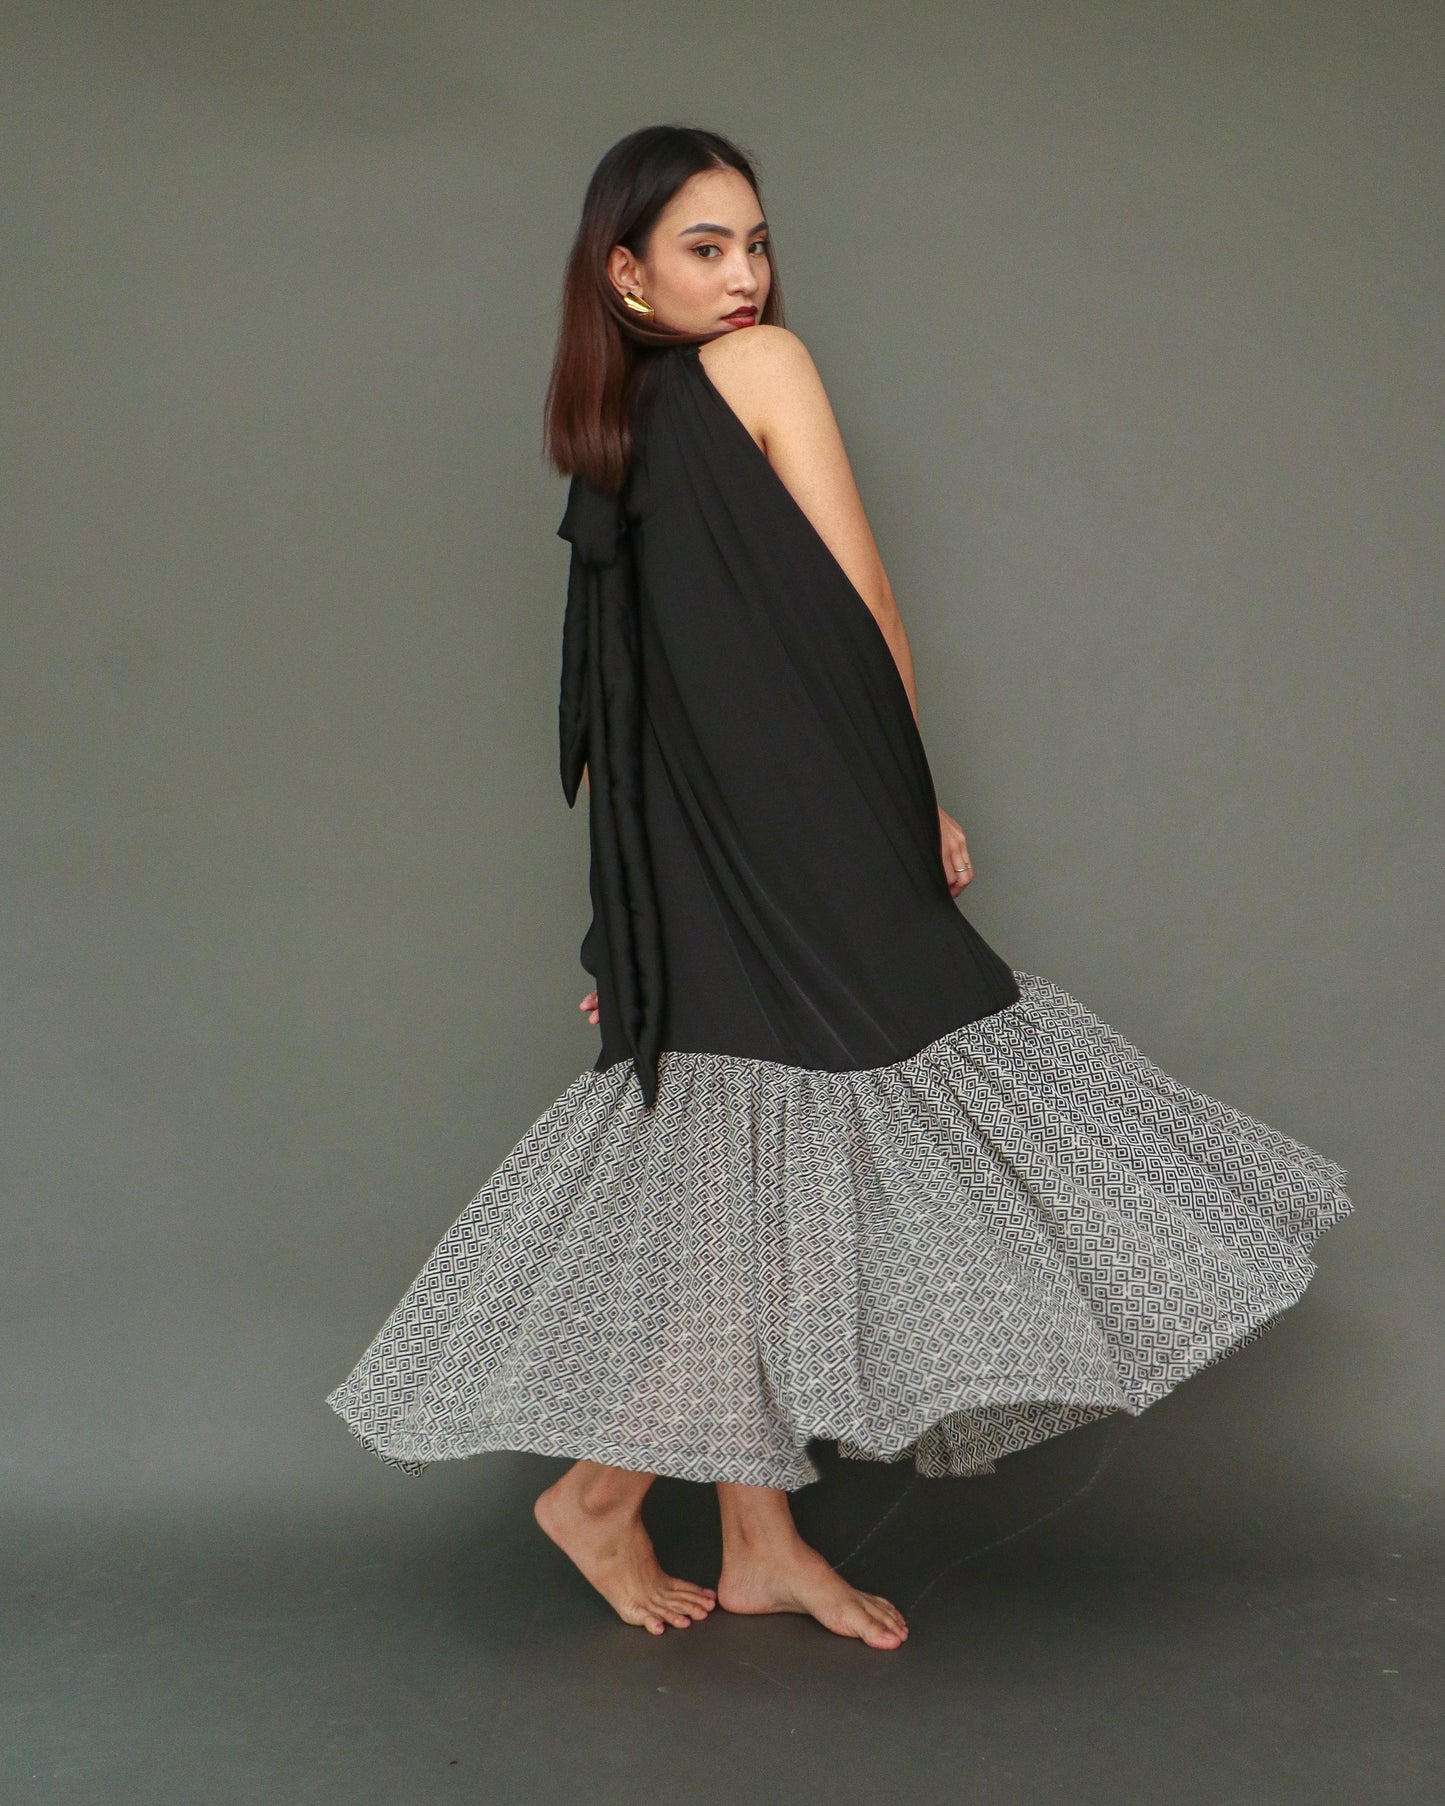 Diwata Flowy Dress in Black